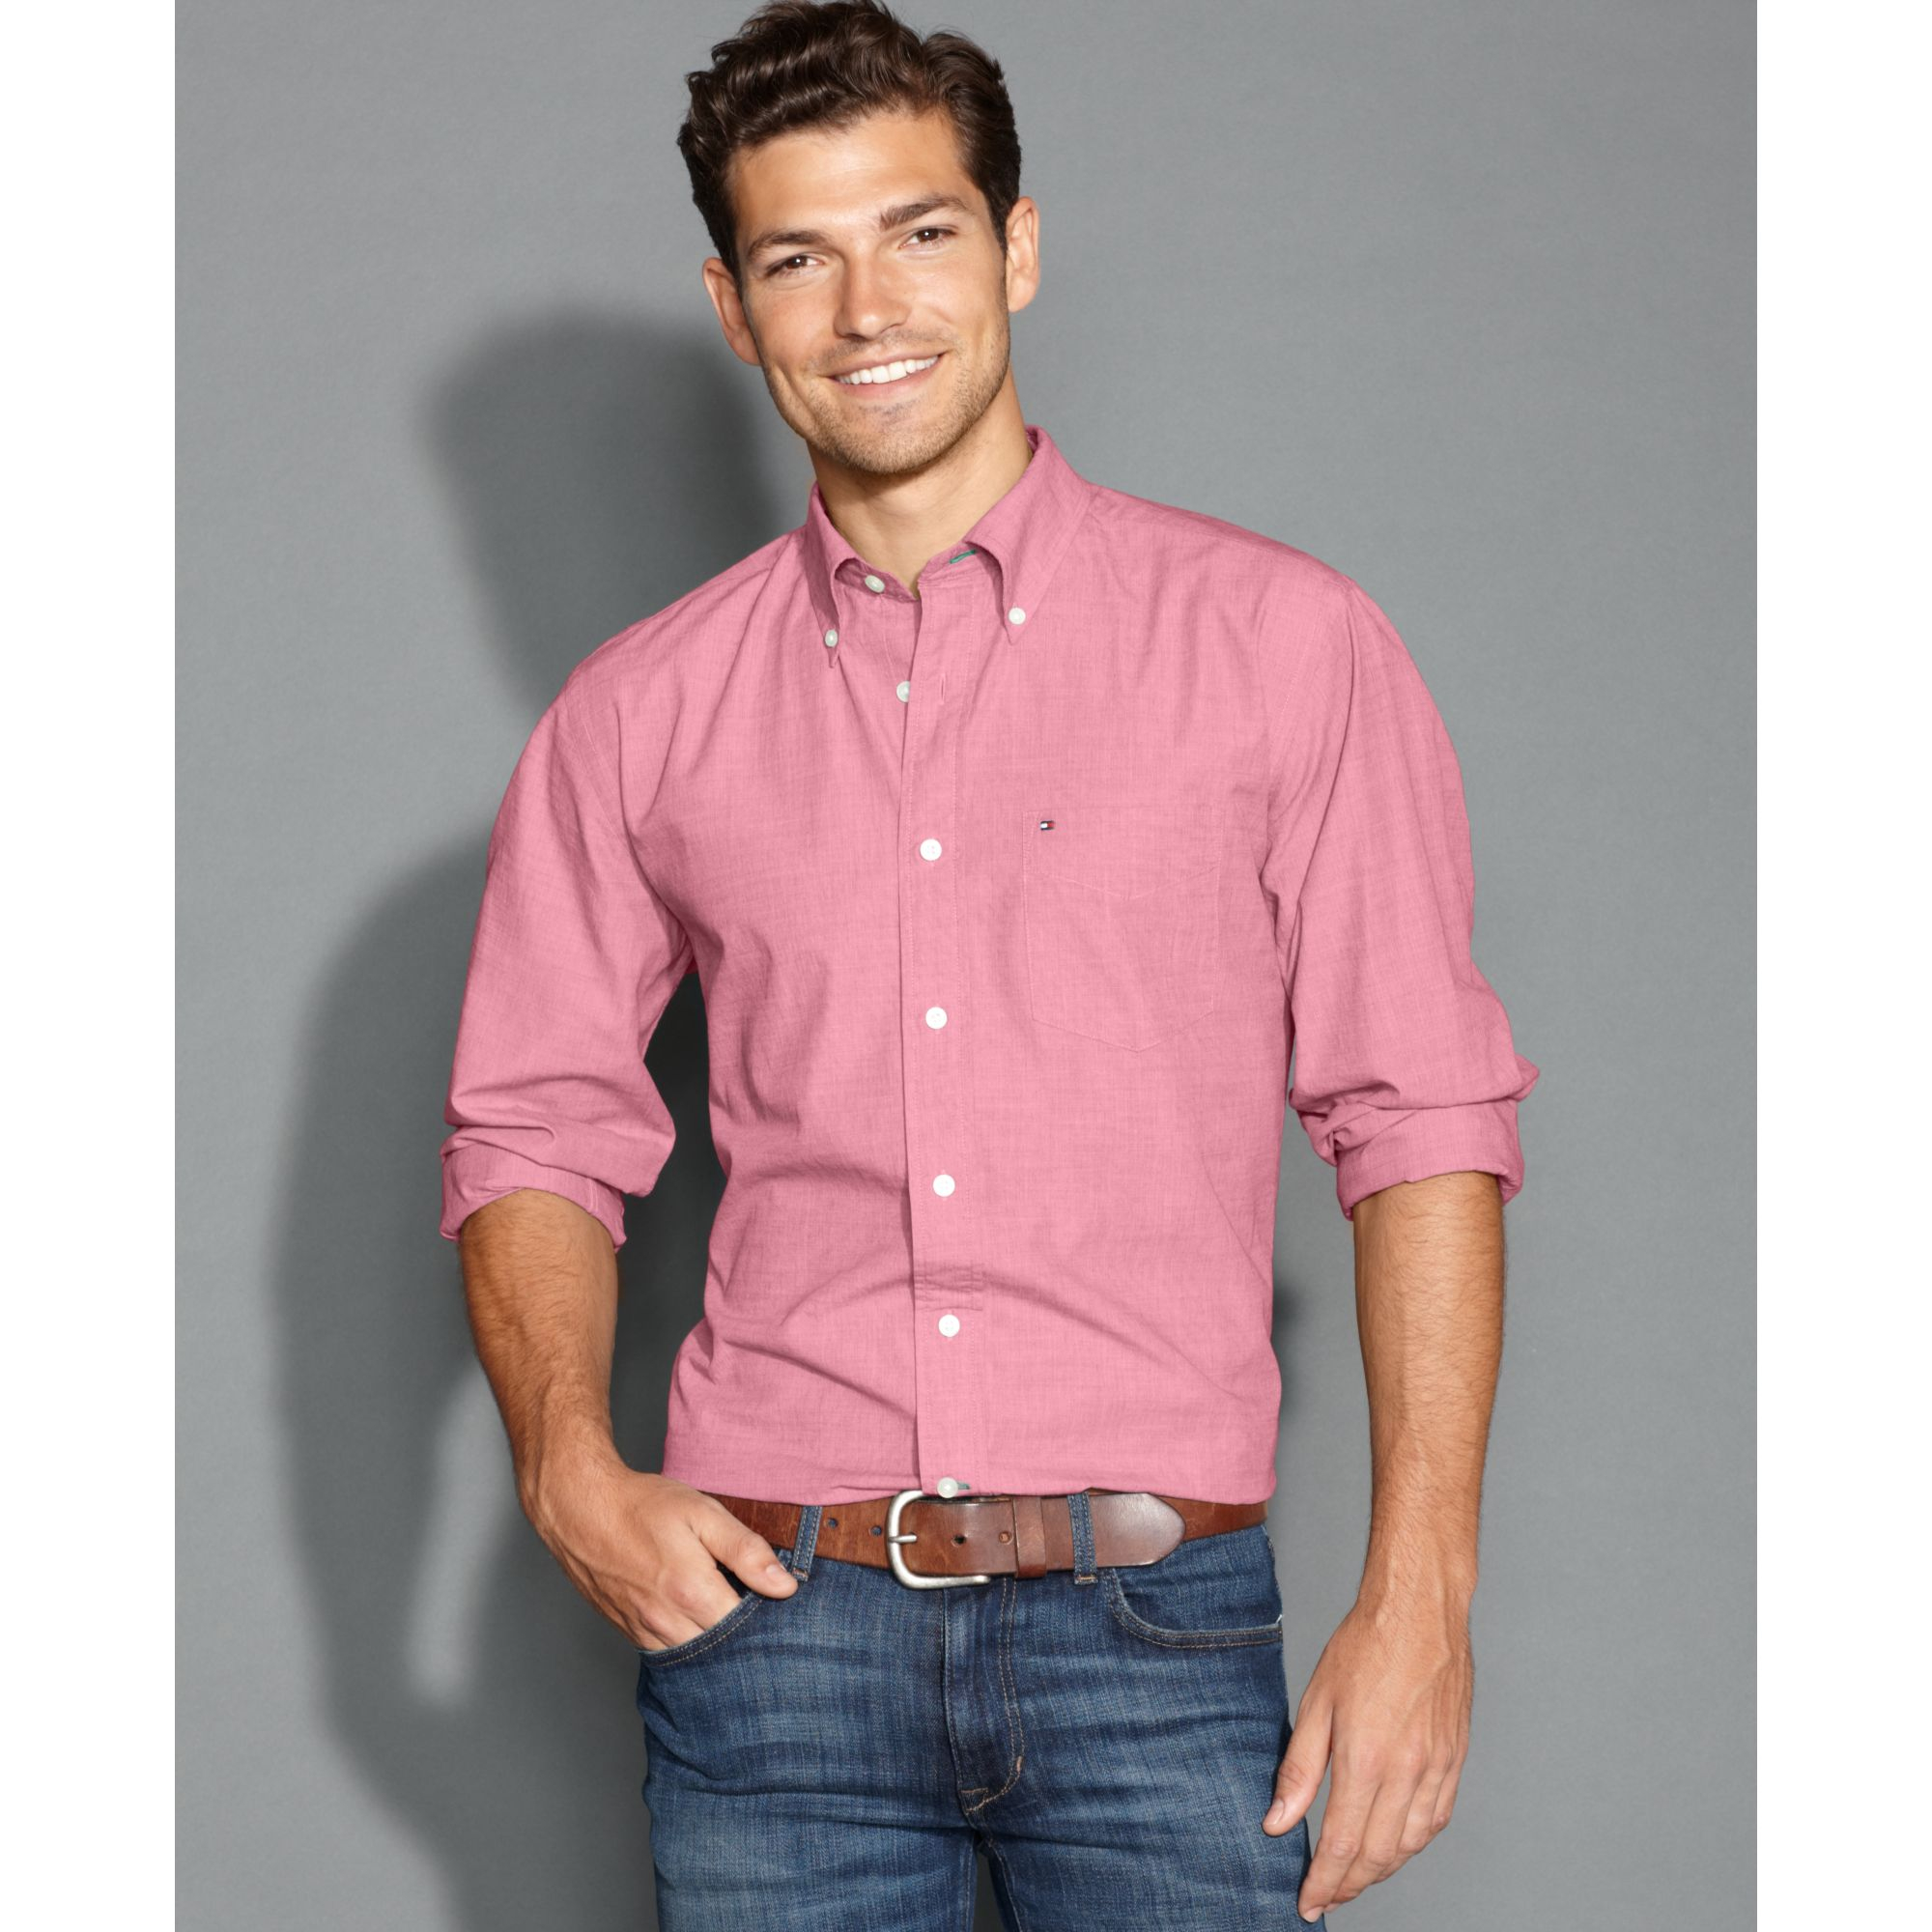 tommy hilfiger pink mens shirt